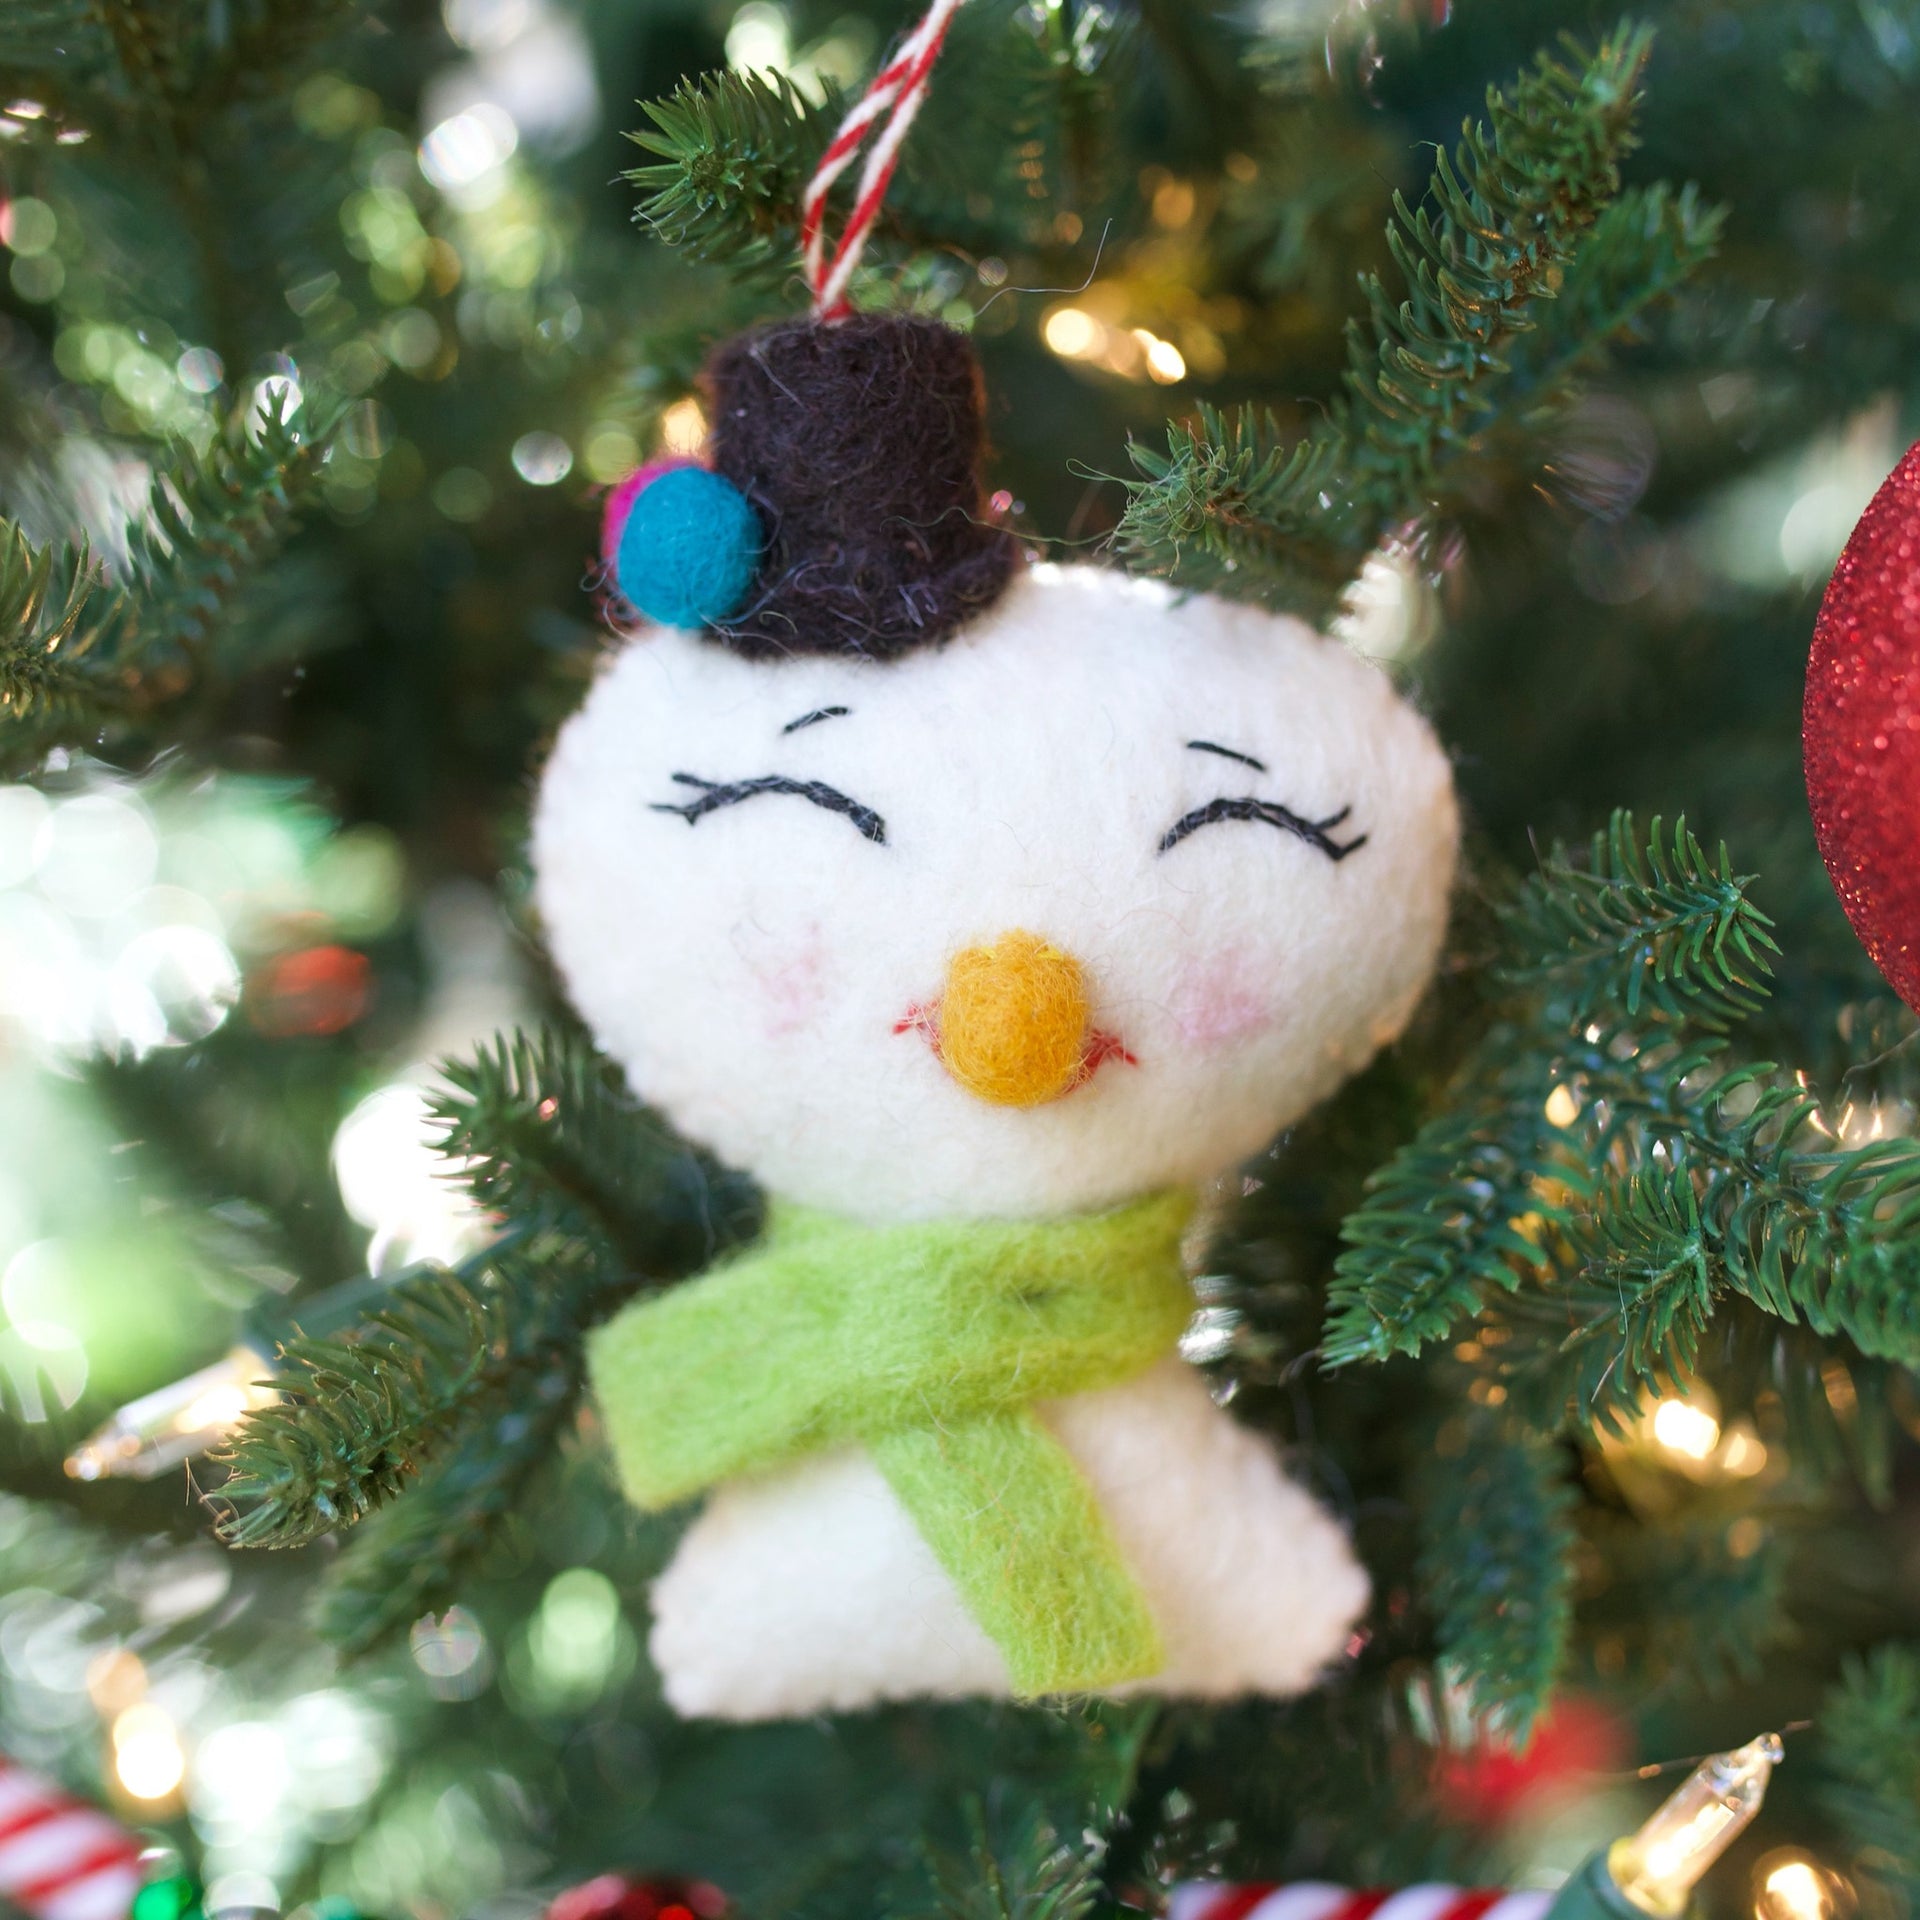 Wool Felt // Christmas // DIY Ornaments, Classic Christmas Felt